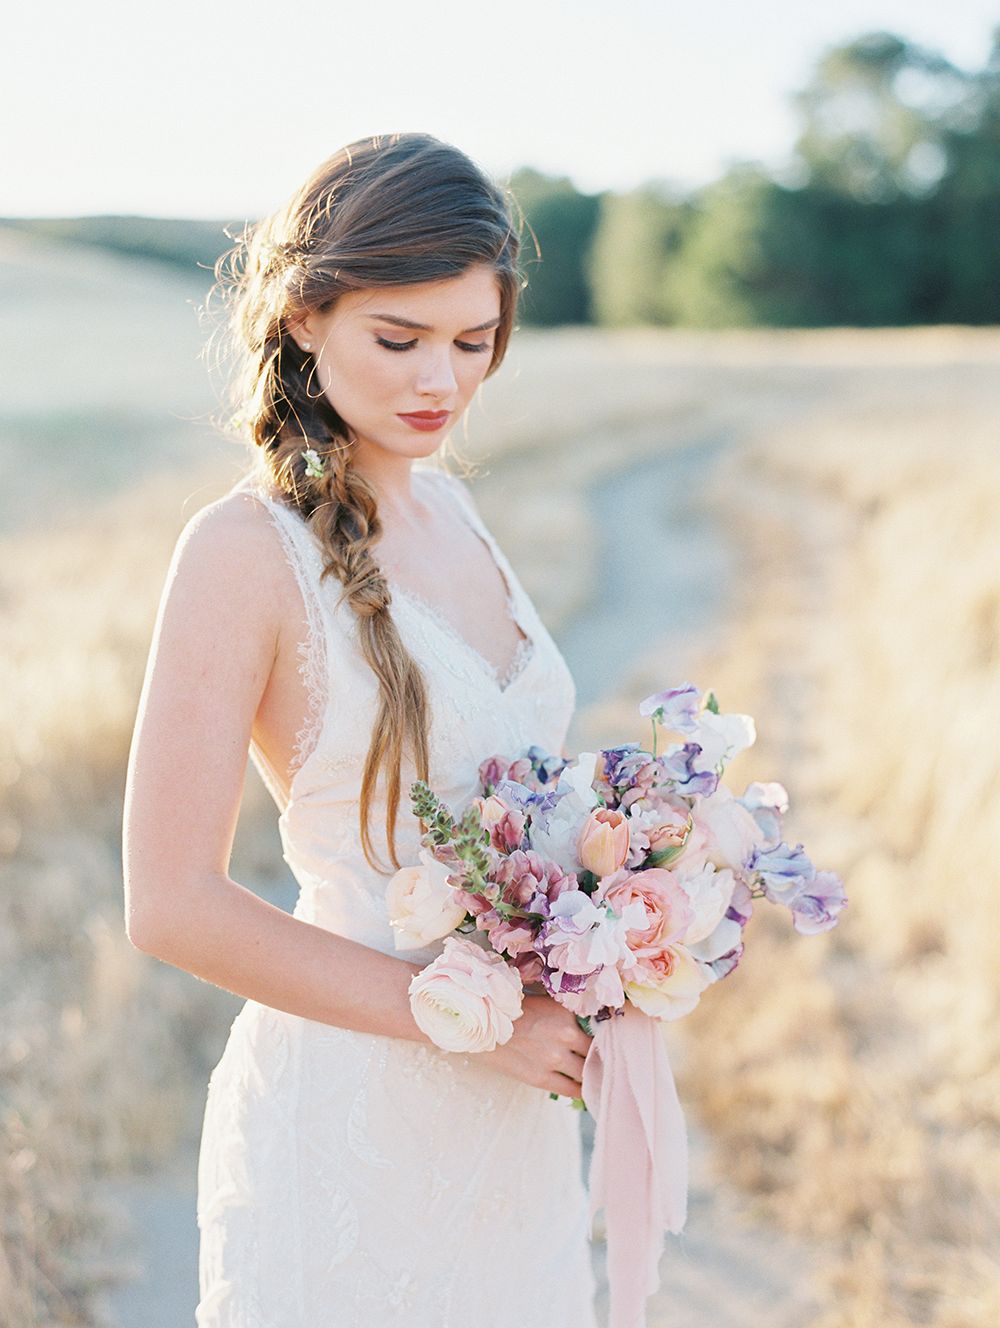 Braided Hair for a Spring Bride by Valentina Glidden | Wedding Sparrow